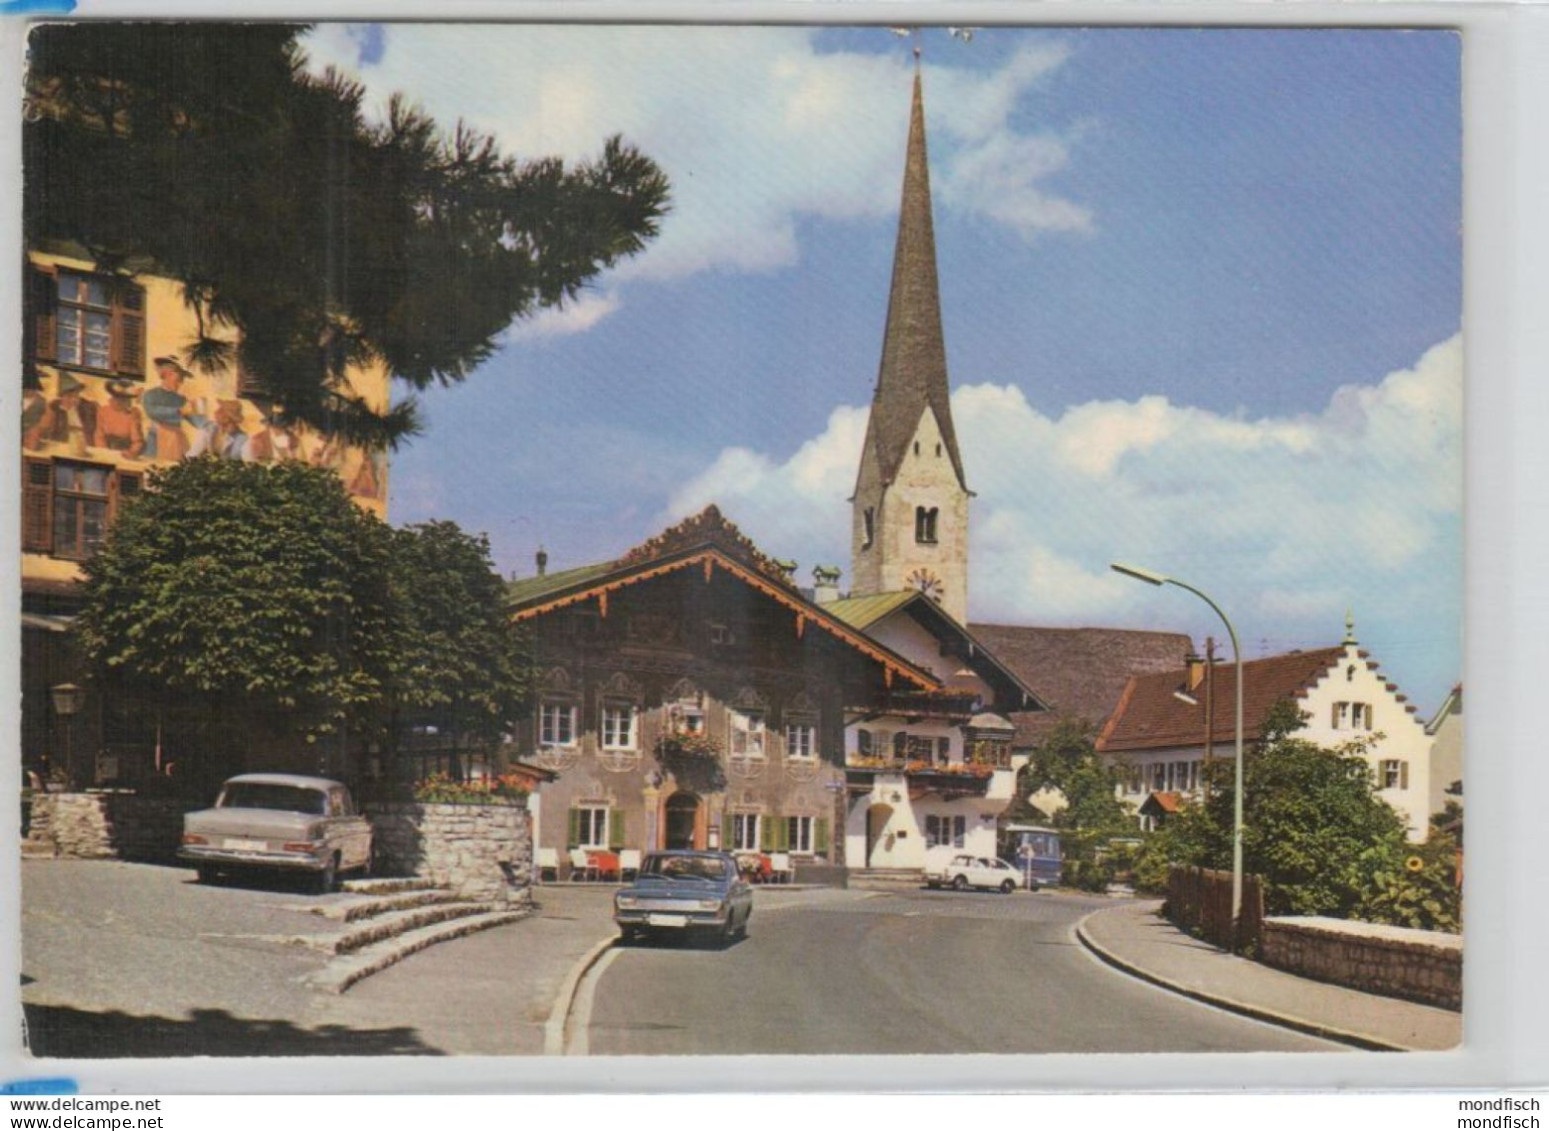 Garmisch - Partenkirchen - Alte Kirche - Opel - Mercedes - Voitures De Tourisme